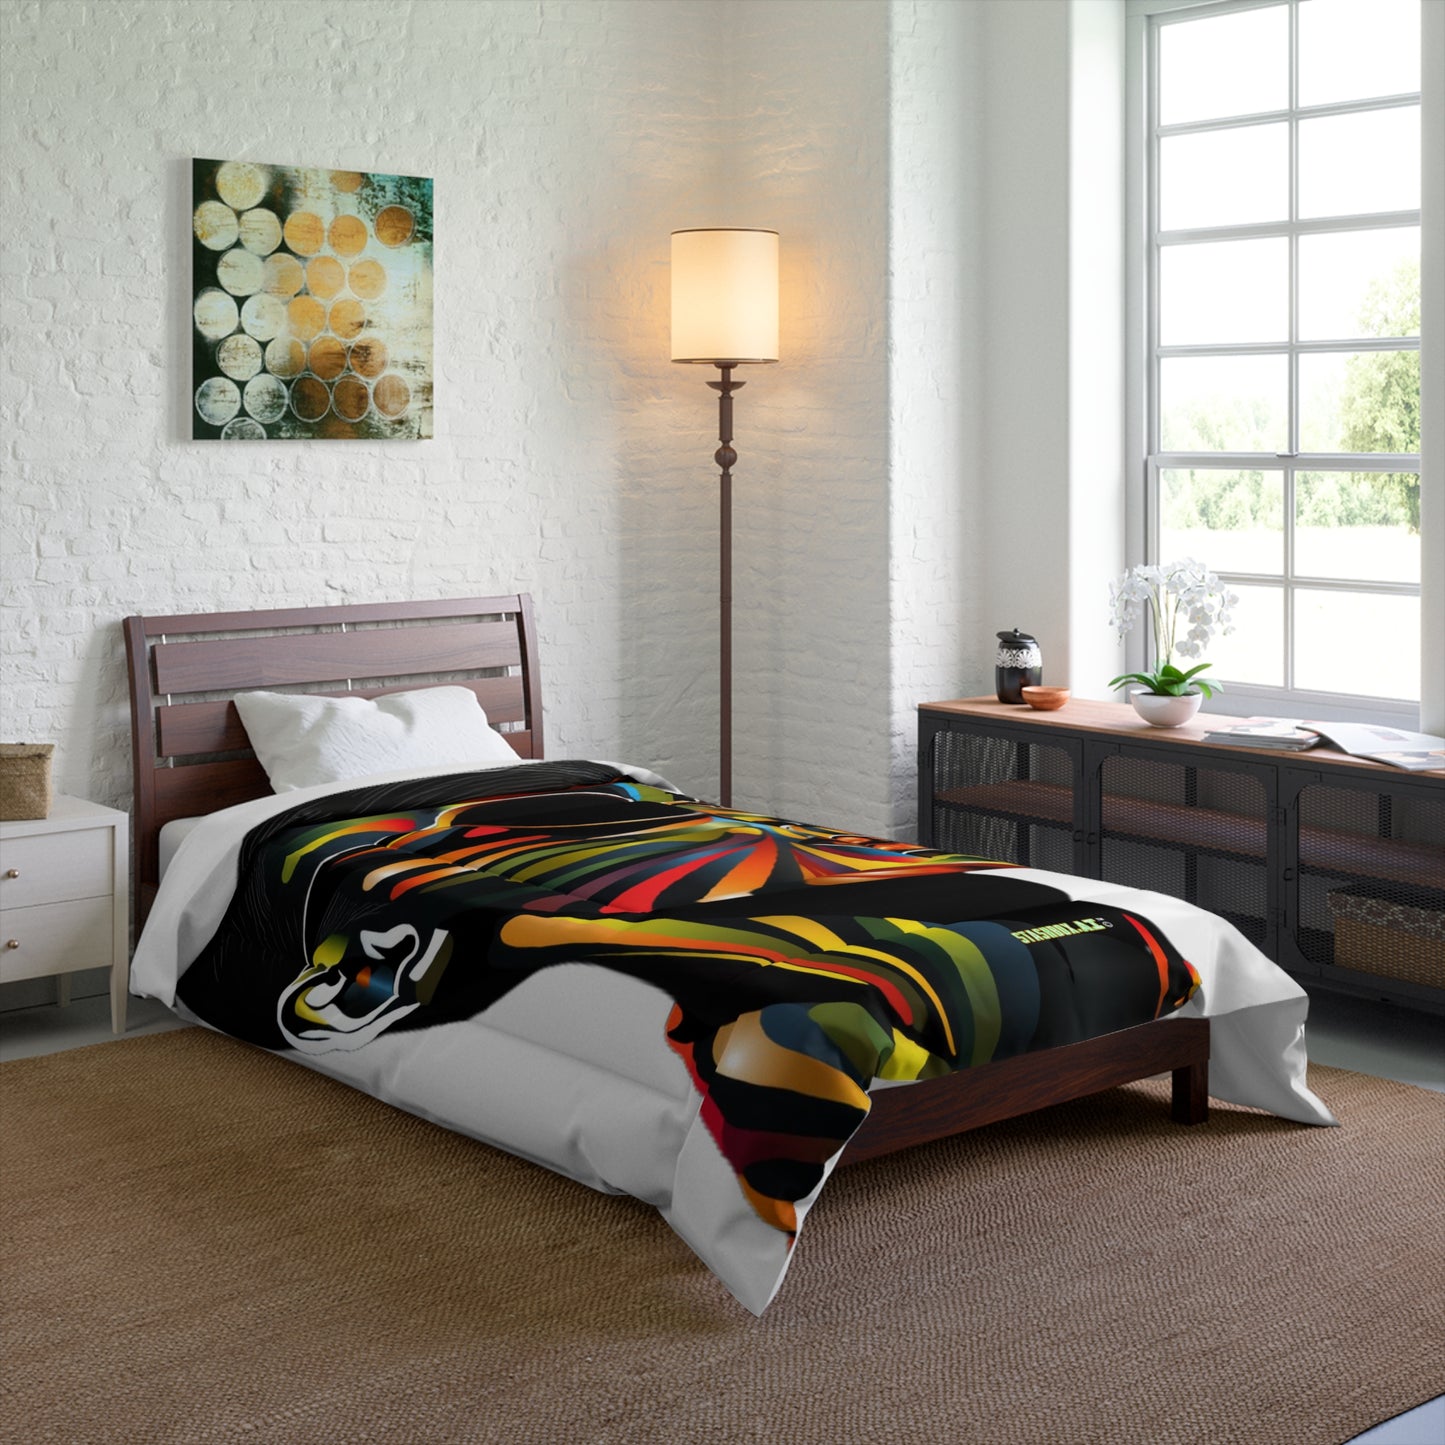 Beautiful Rainbow Model Bedding Comforter 002